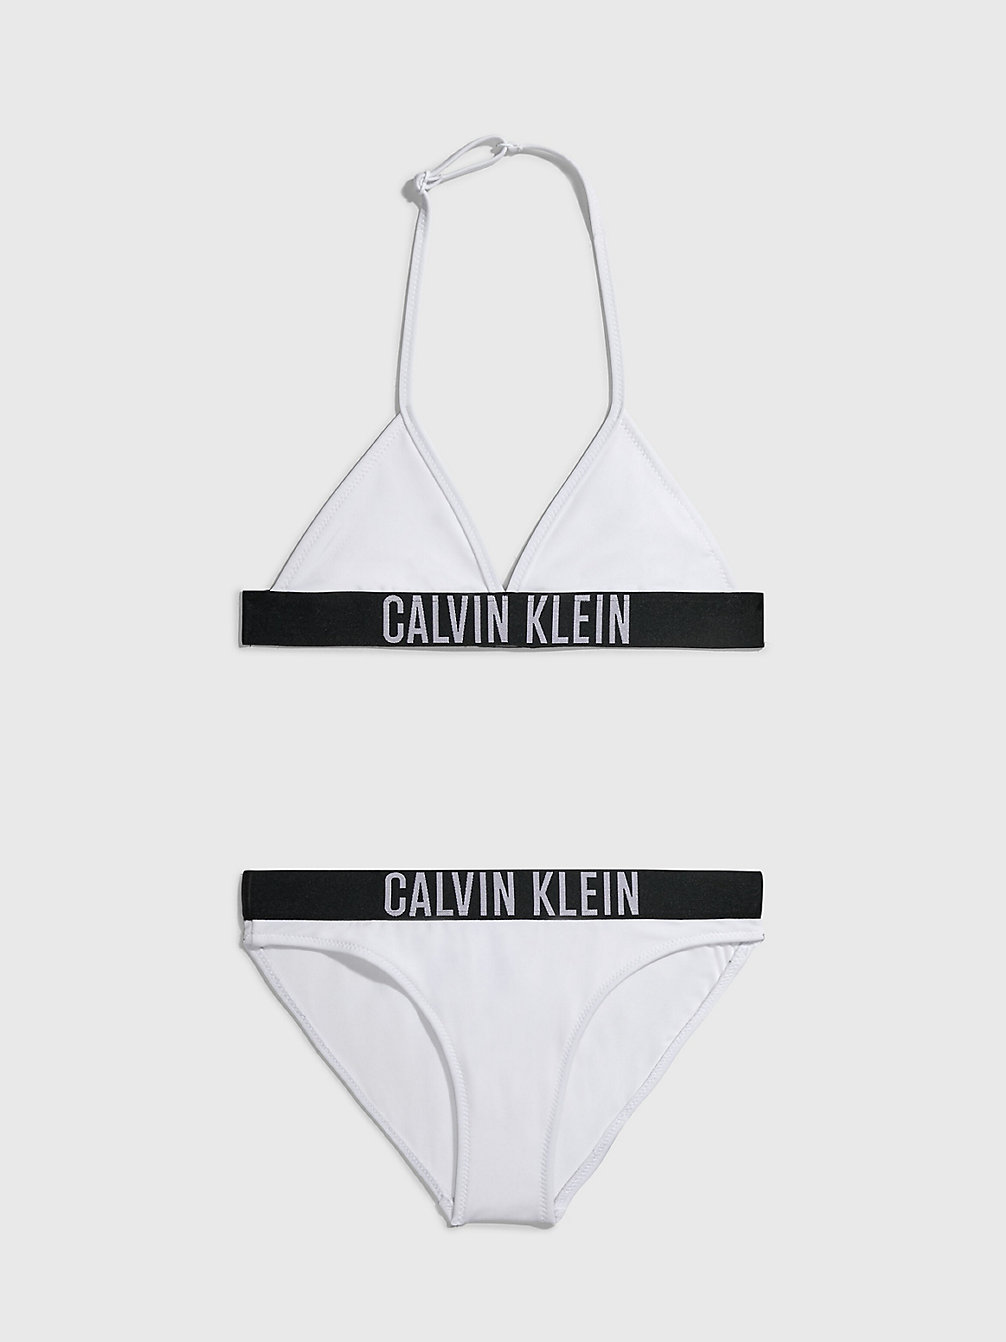 Ensemble Bikini Triangle Pour Fille - Intense Power > PVH CLASSIC WHITE > undefined filles > Calvin Klein